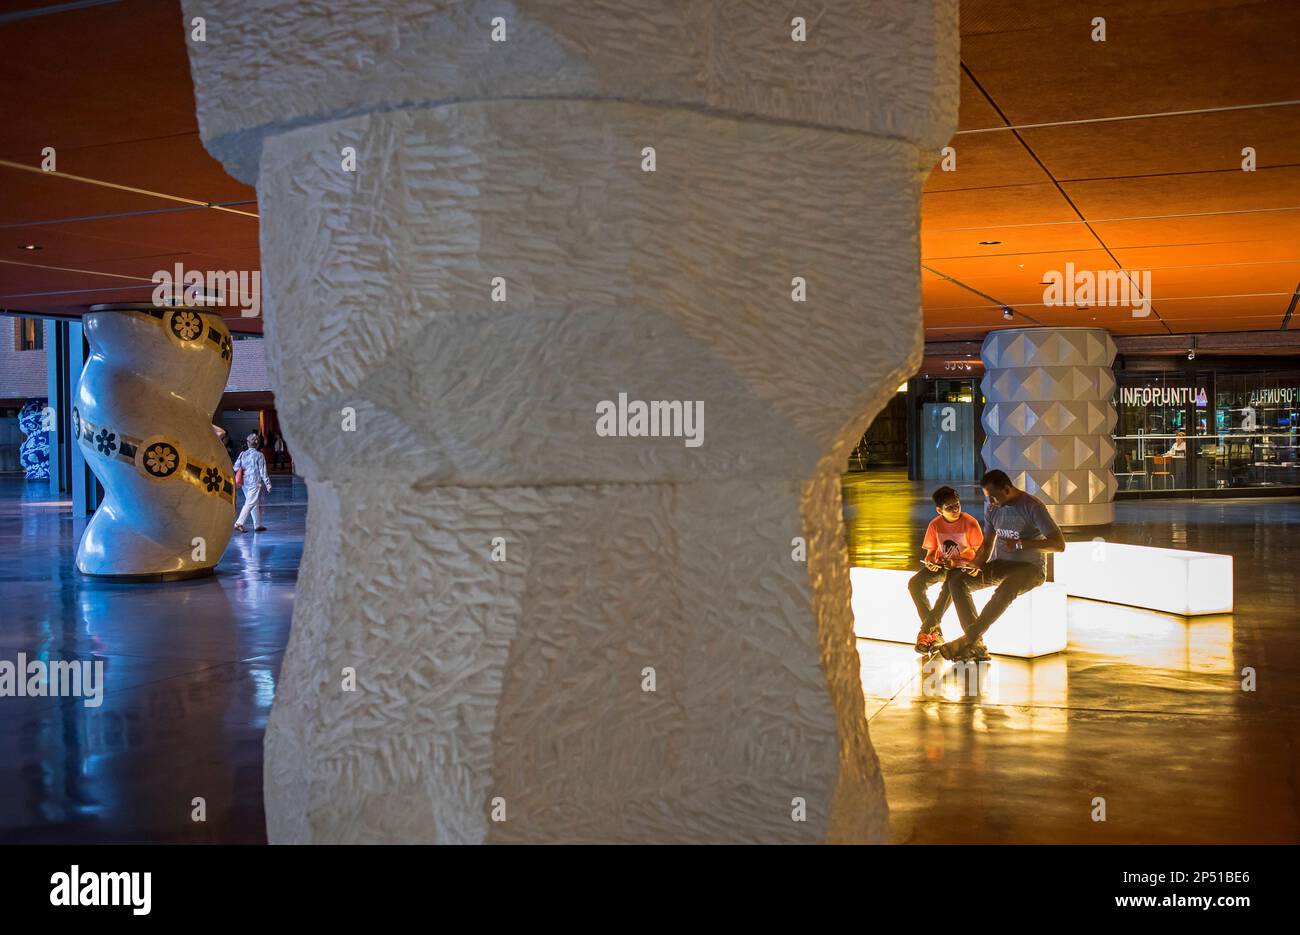 Atrium of cultures, Azkuna Zentroa, Alhondiga building, Bilbao, Bizkaia, Basque Country, Spain Stock Photo